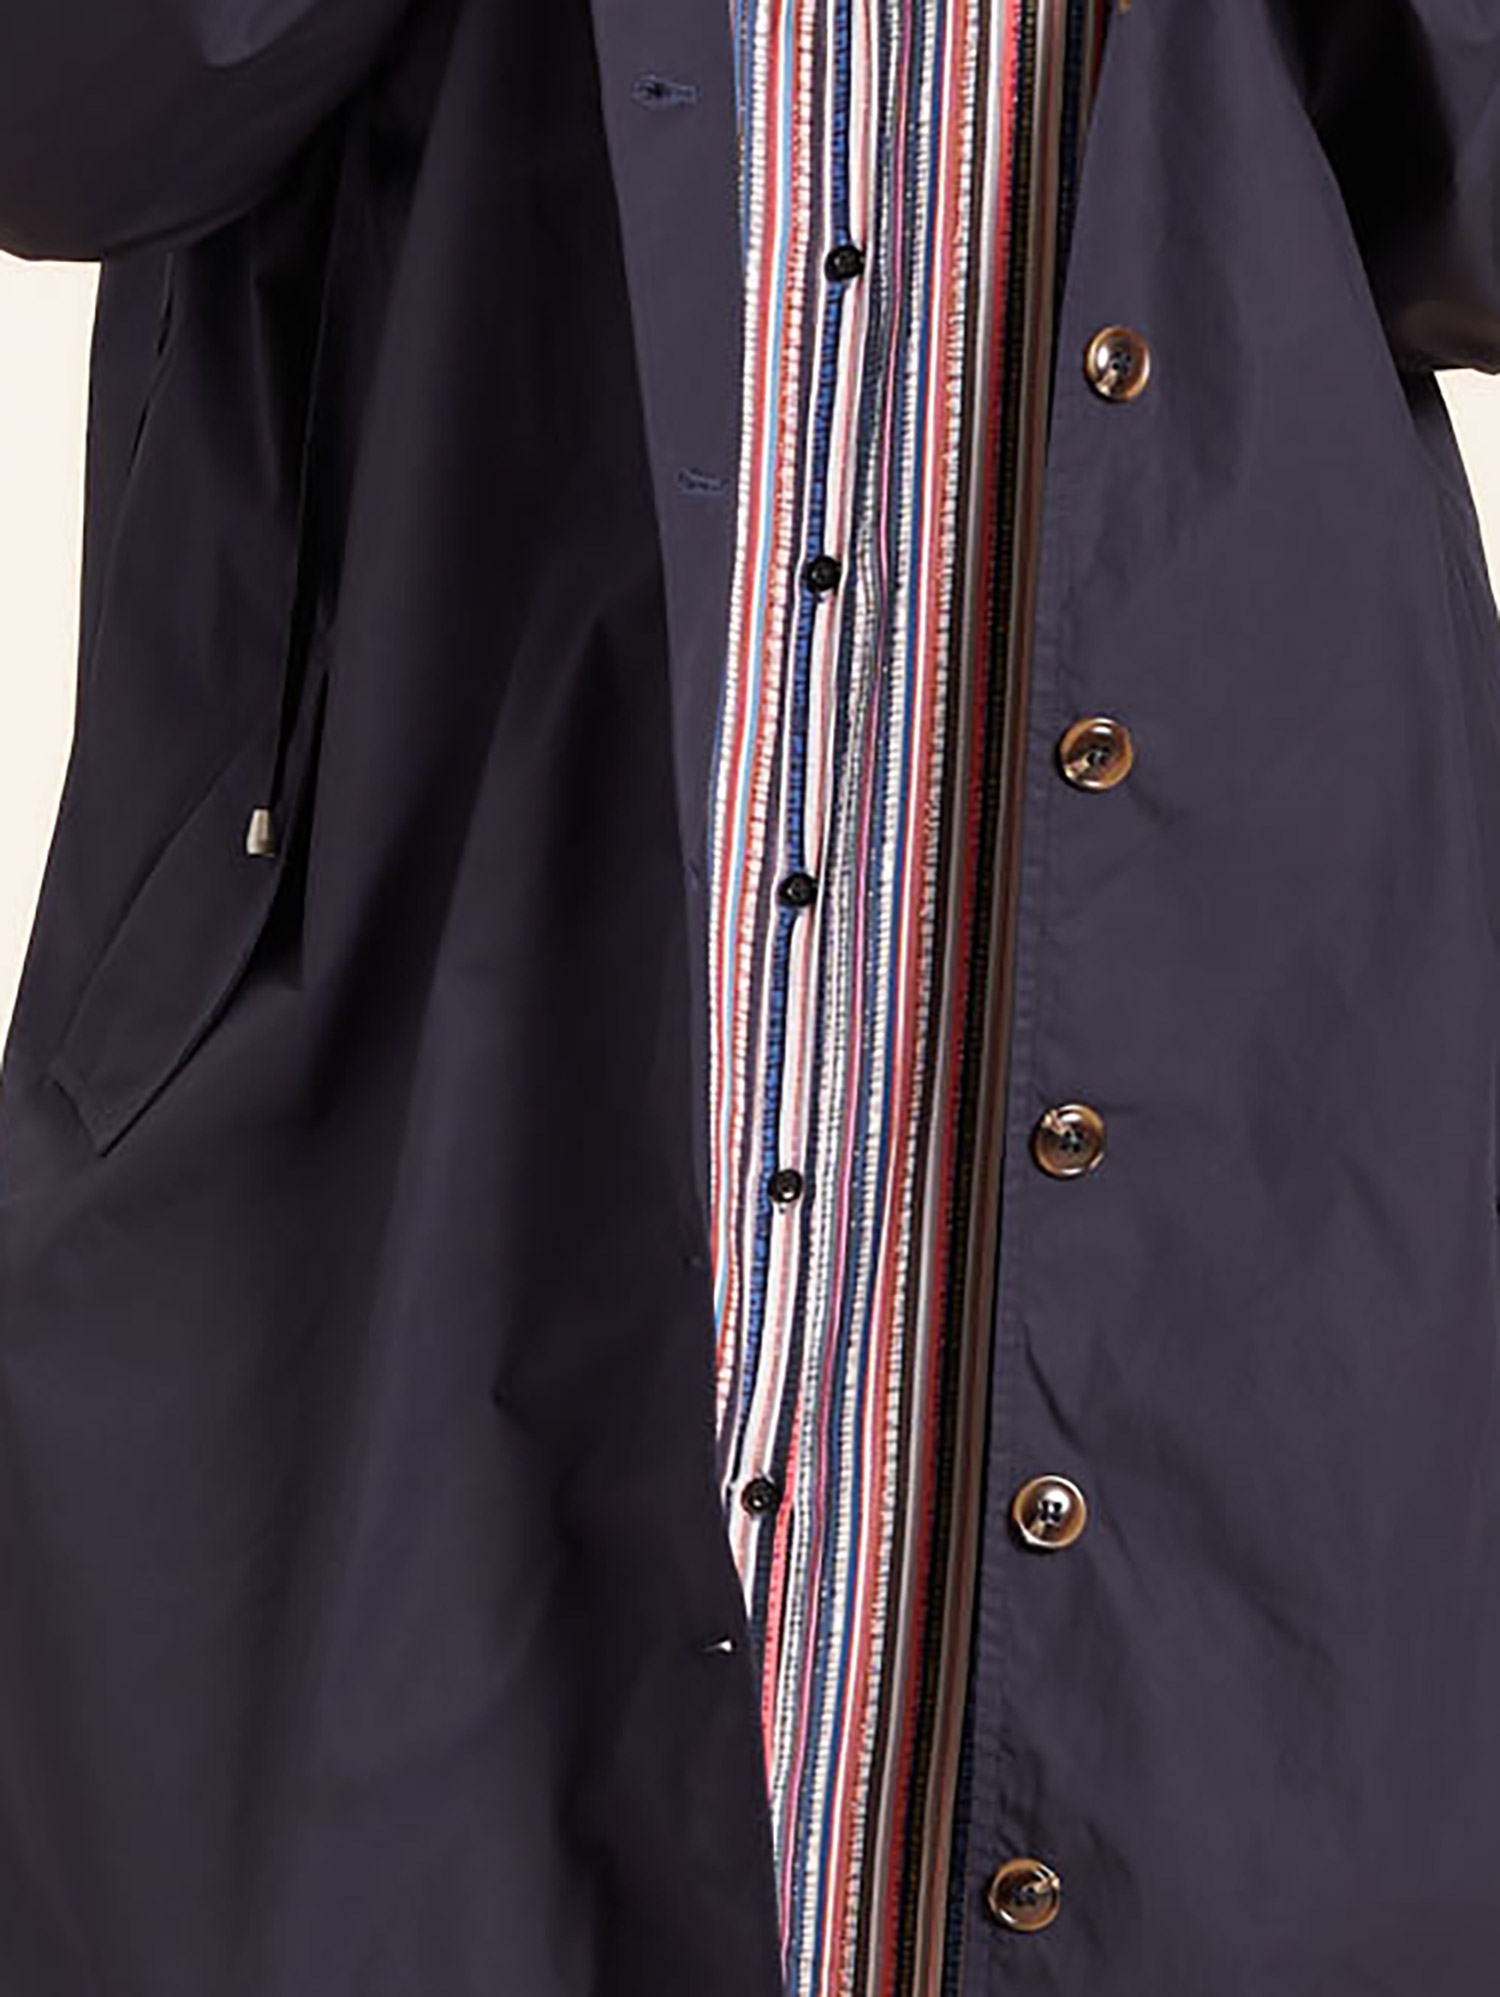 Liss - Marine blå bomulds jakke / Trenchcoat med hætte og gode lommer fra Gozzip